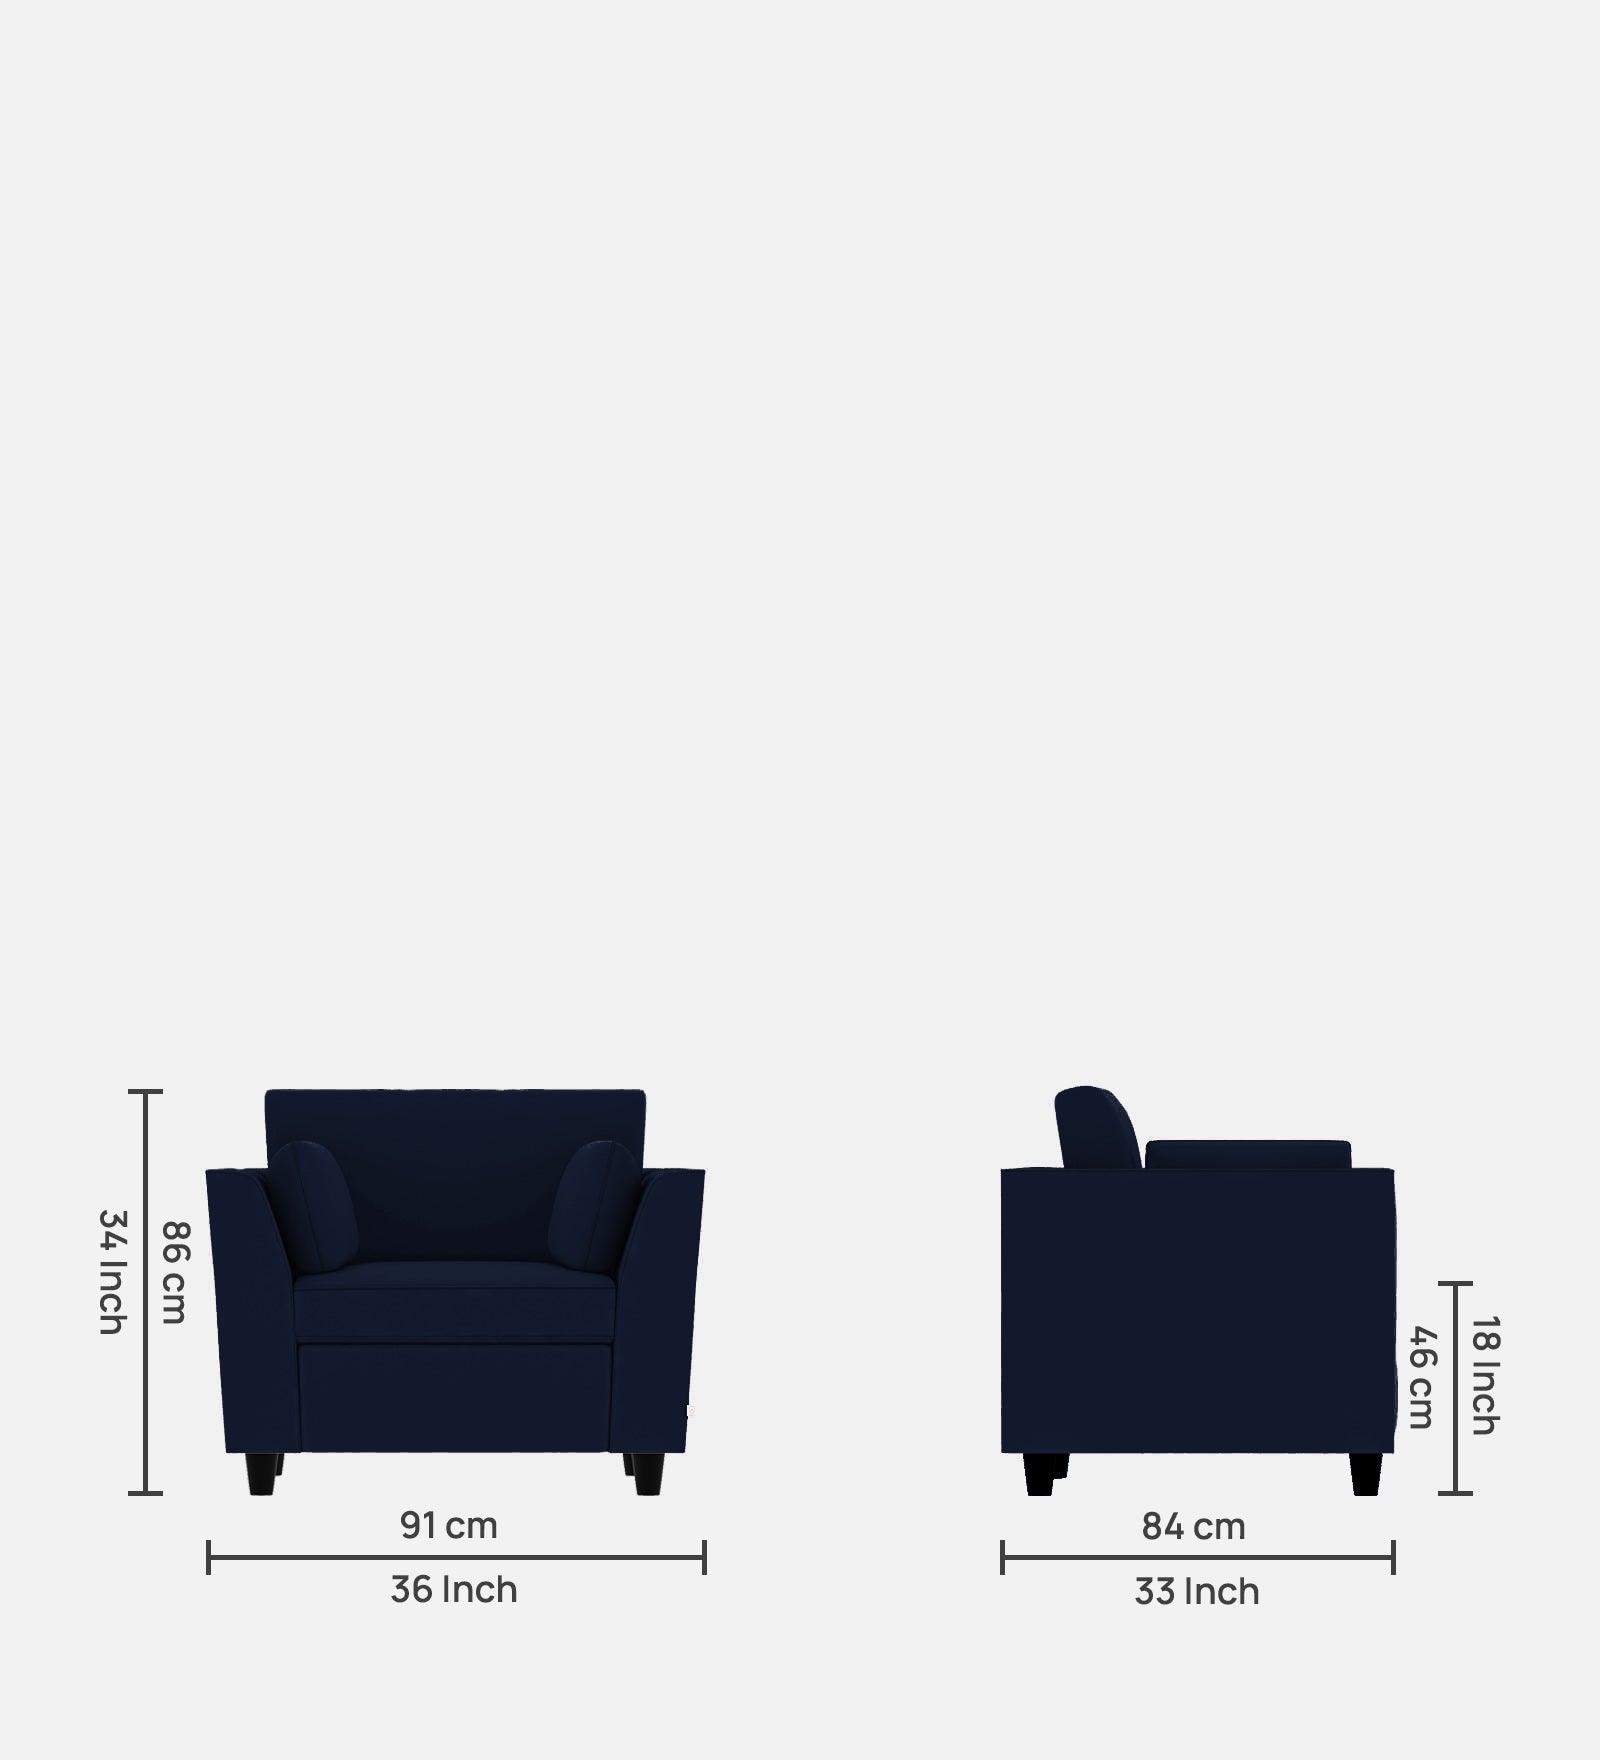 Bristo Velvet 1 Seater Sofa in Indigo Blue Colour With Storage